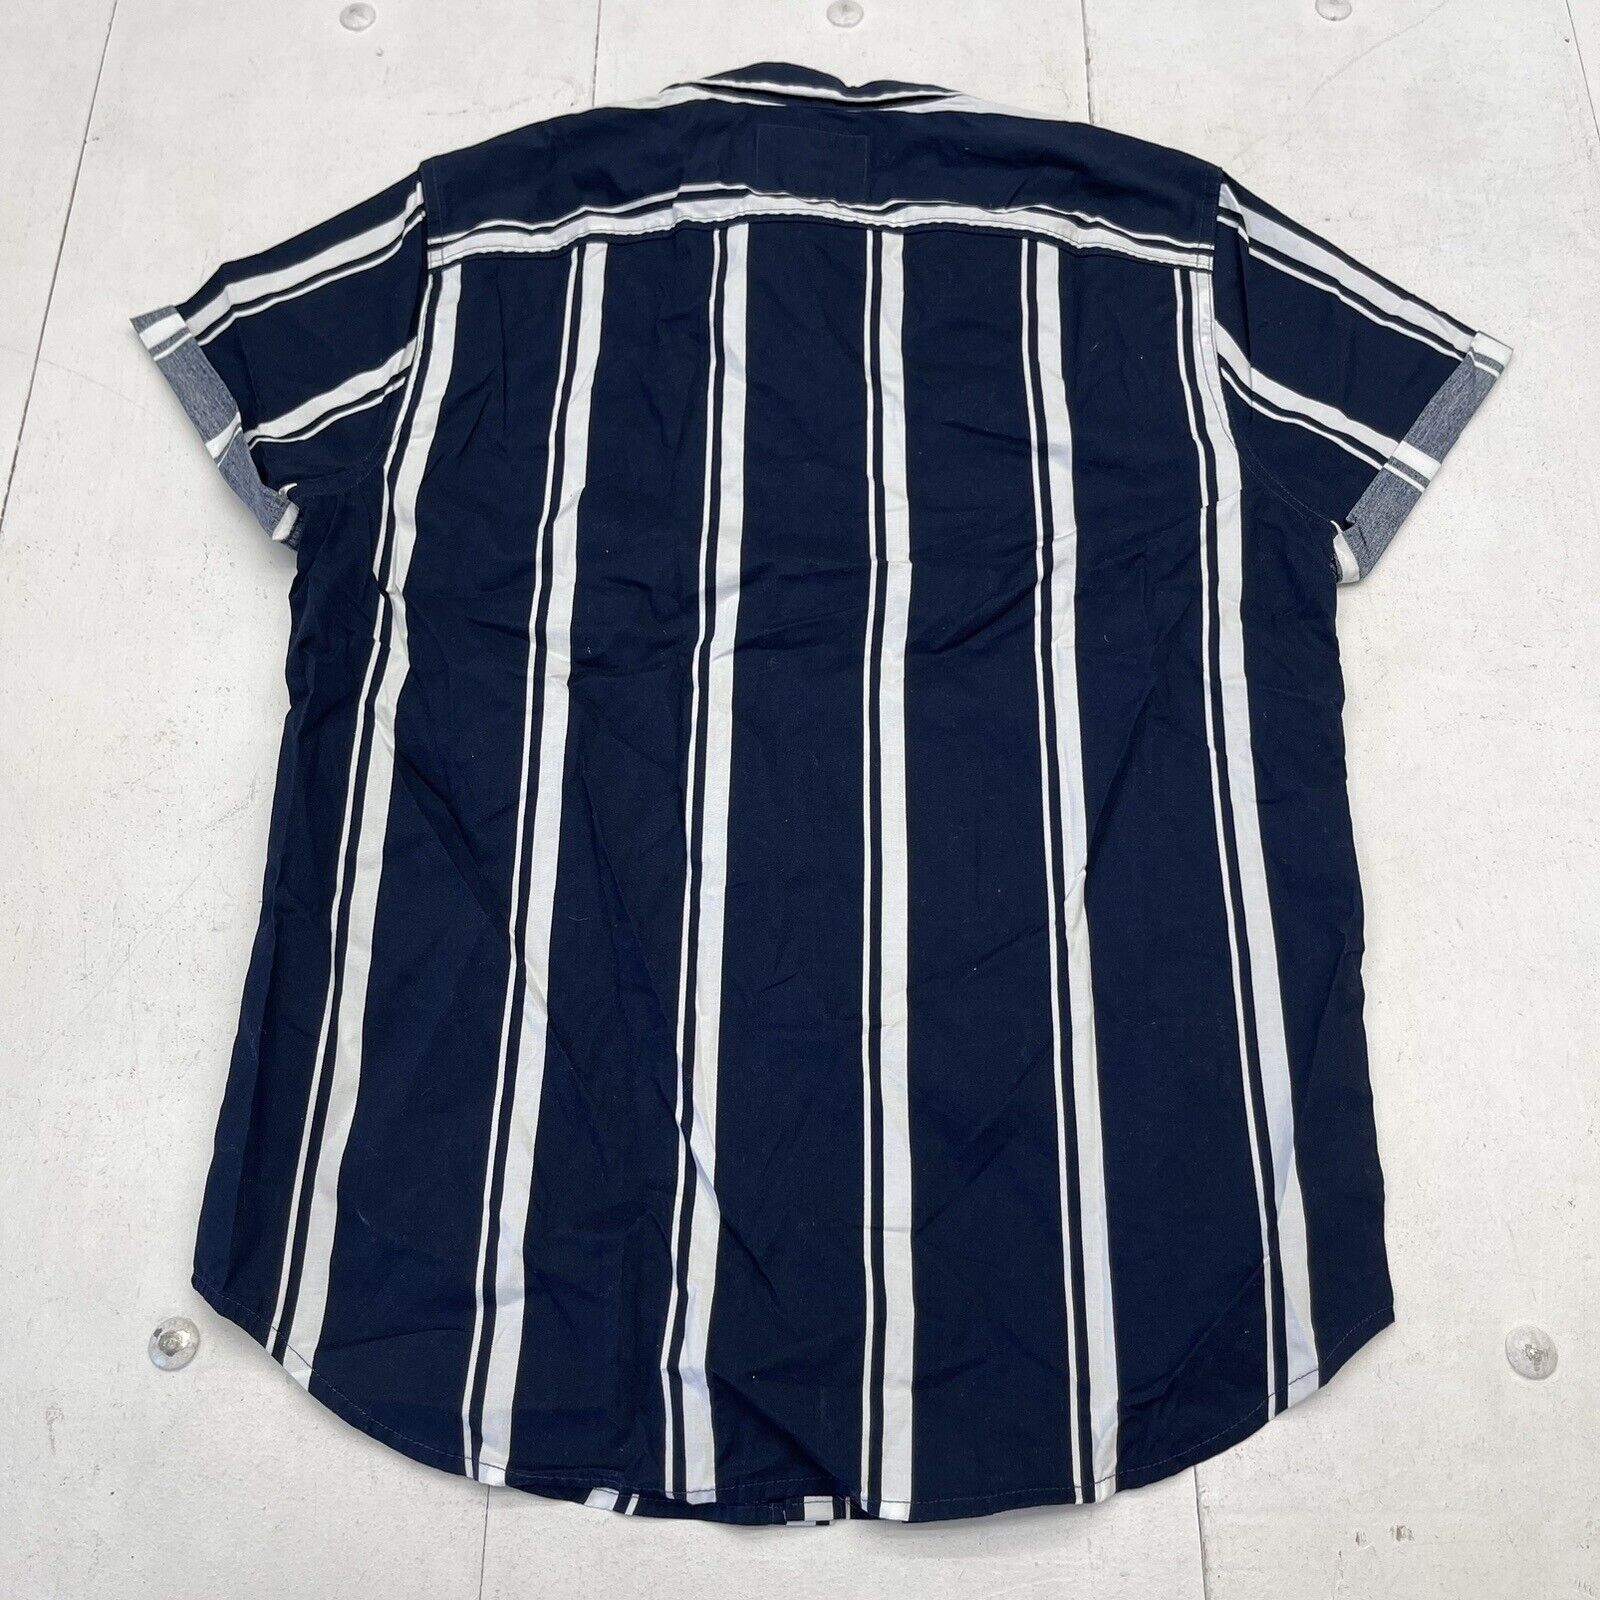 Hollister long sleeve shirt in light blue stripe